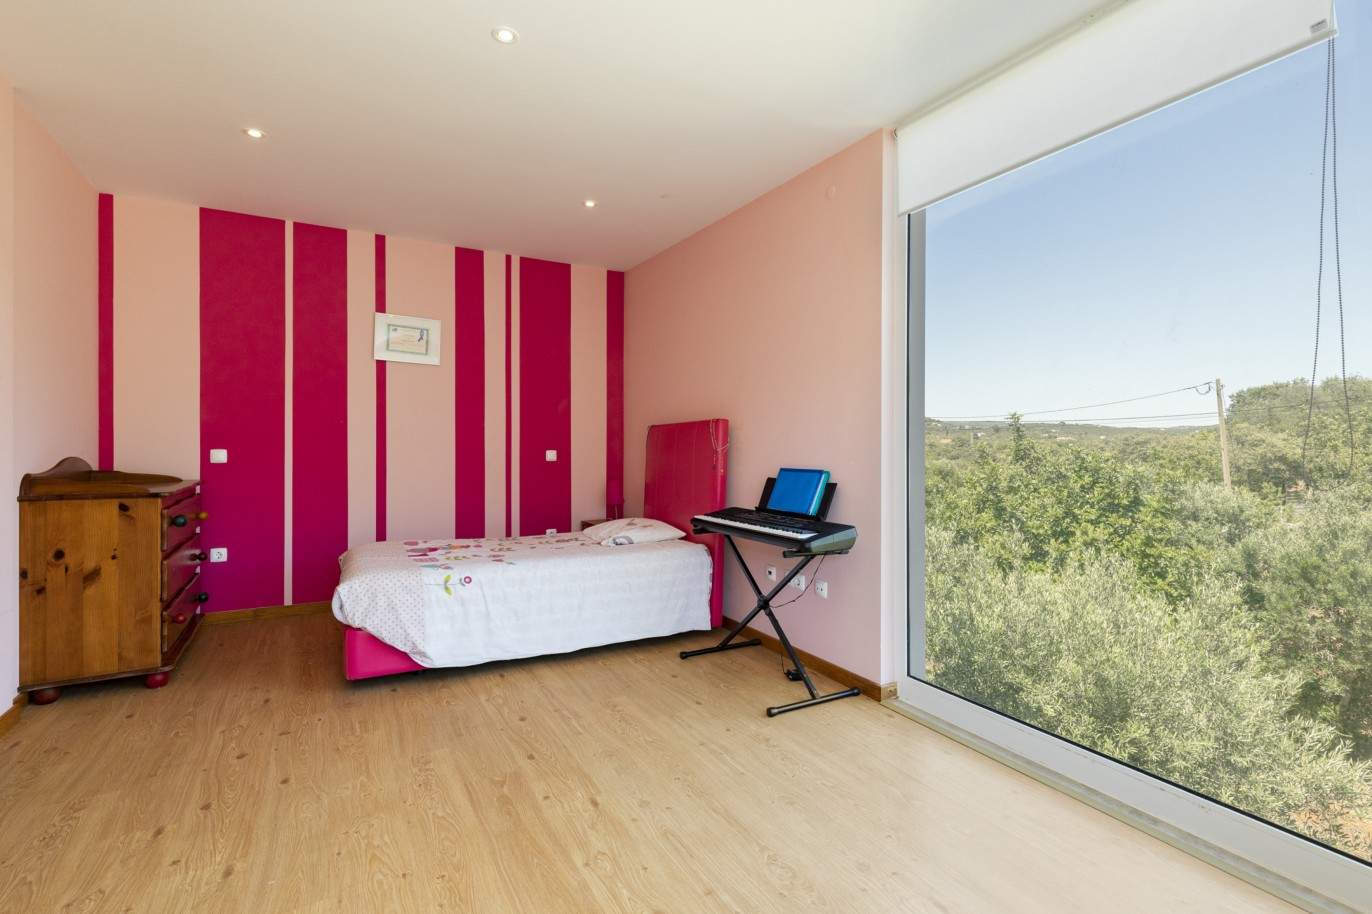 4 Bedroom Villa with pool, for sale in Loulé, Algarve_201288